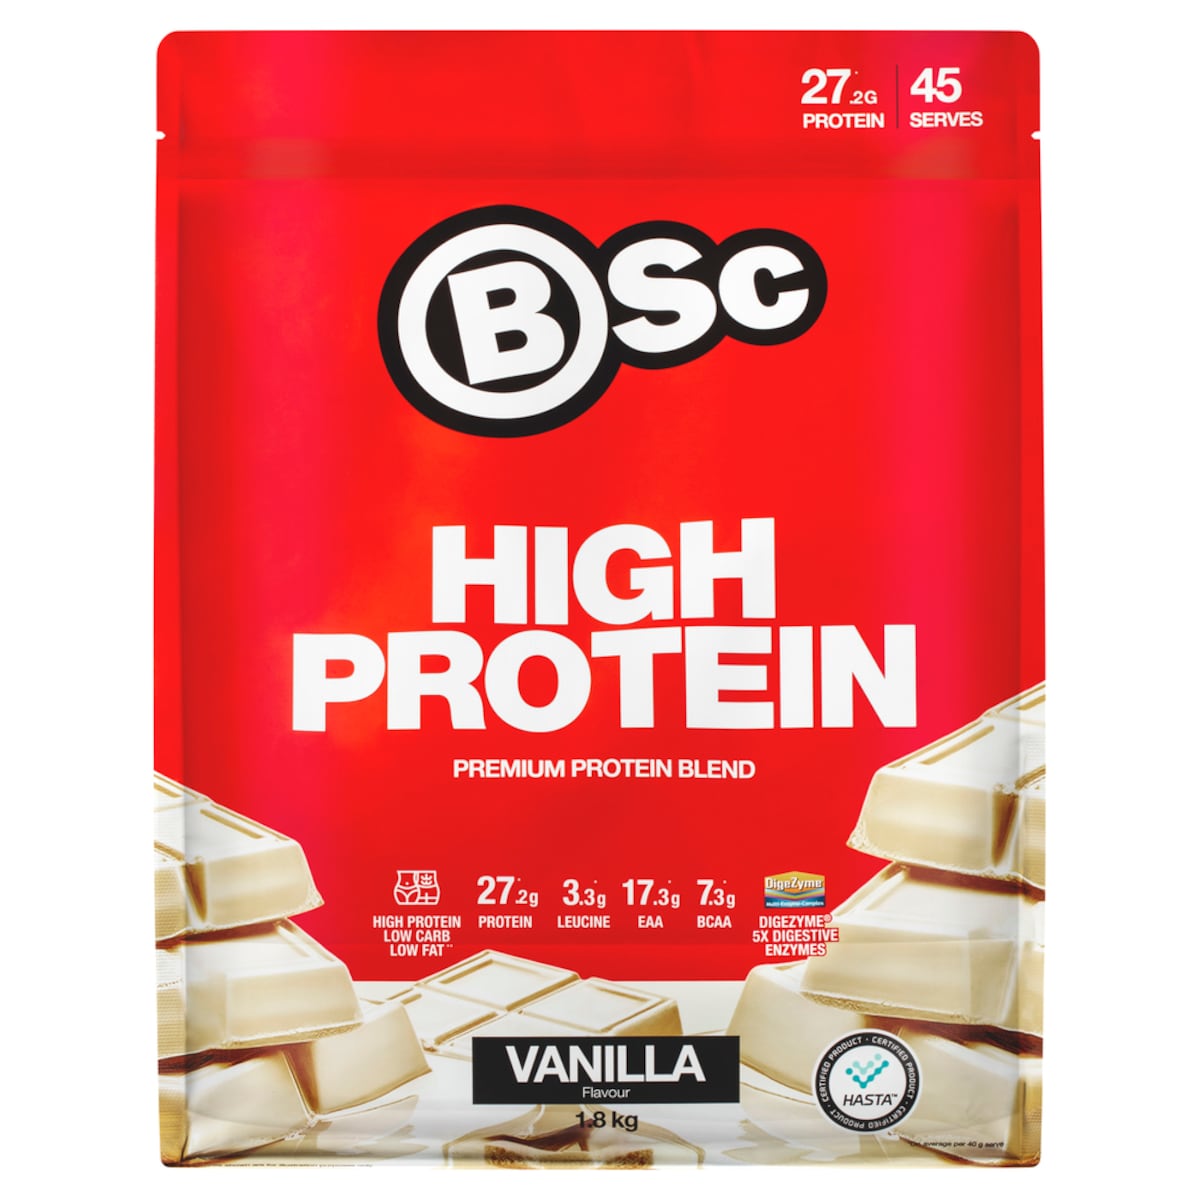 BSc Body Science High Protein Powder Vanilla 1.8kg Australia